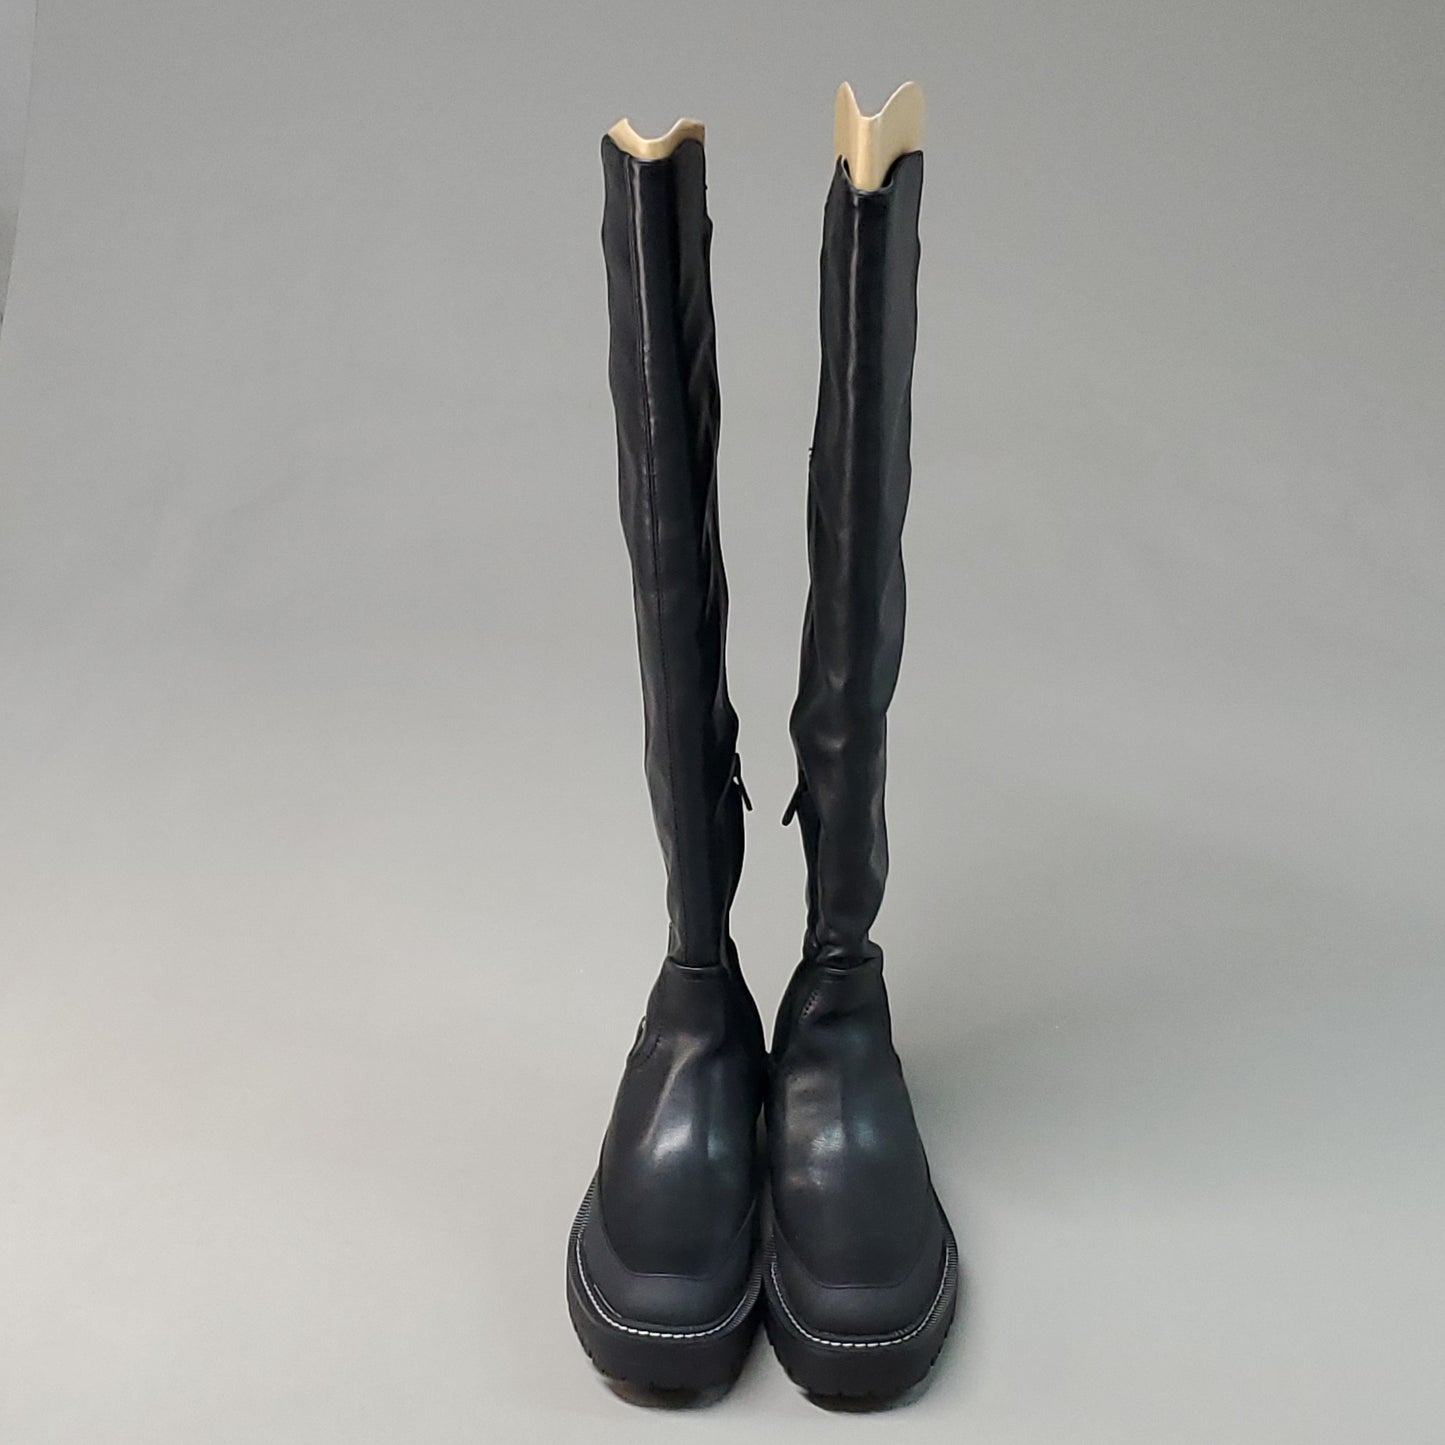 SAM EDELMAN Lerue Nappa Tall Leather Riding Boots Women's Sz 7.5 M Black H8522L1001 (New)